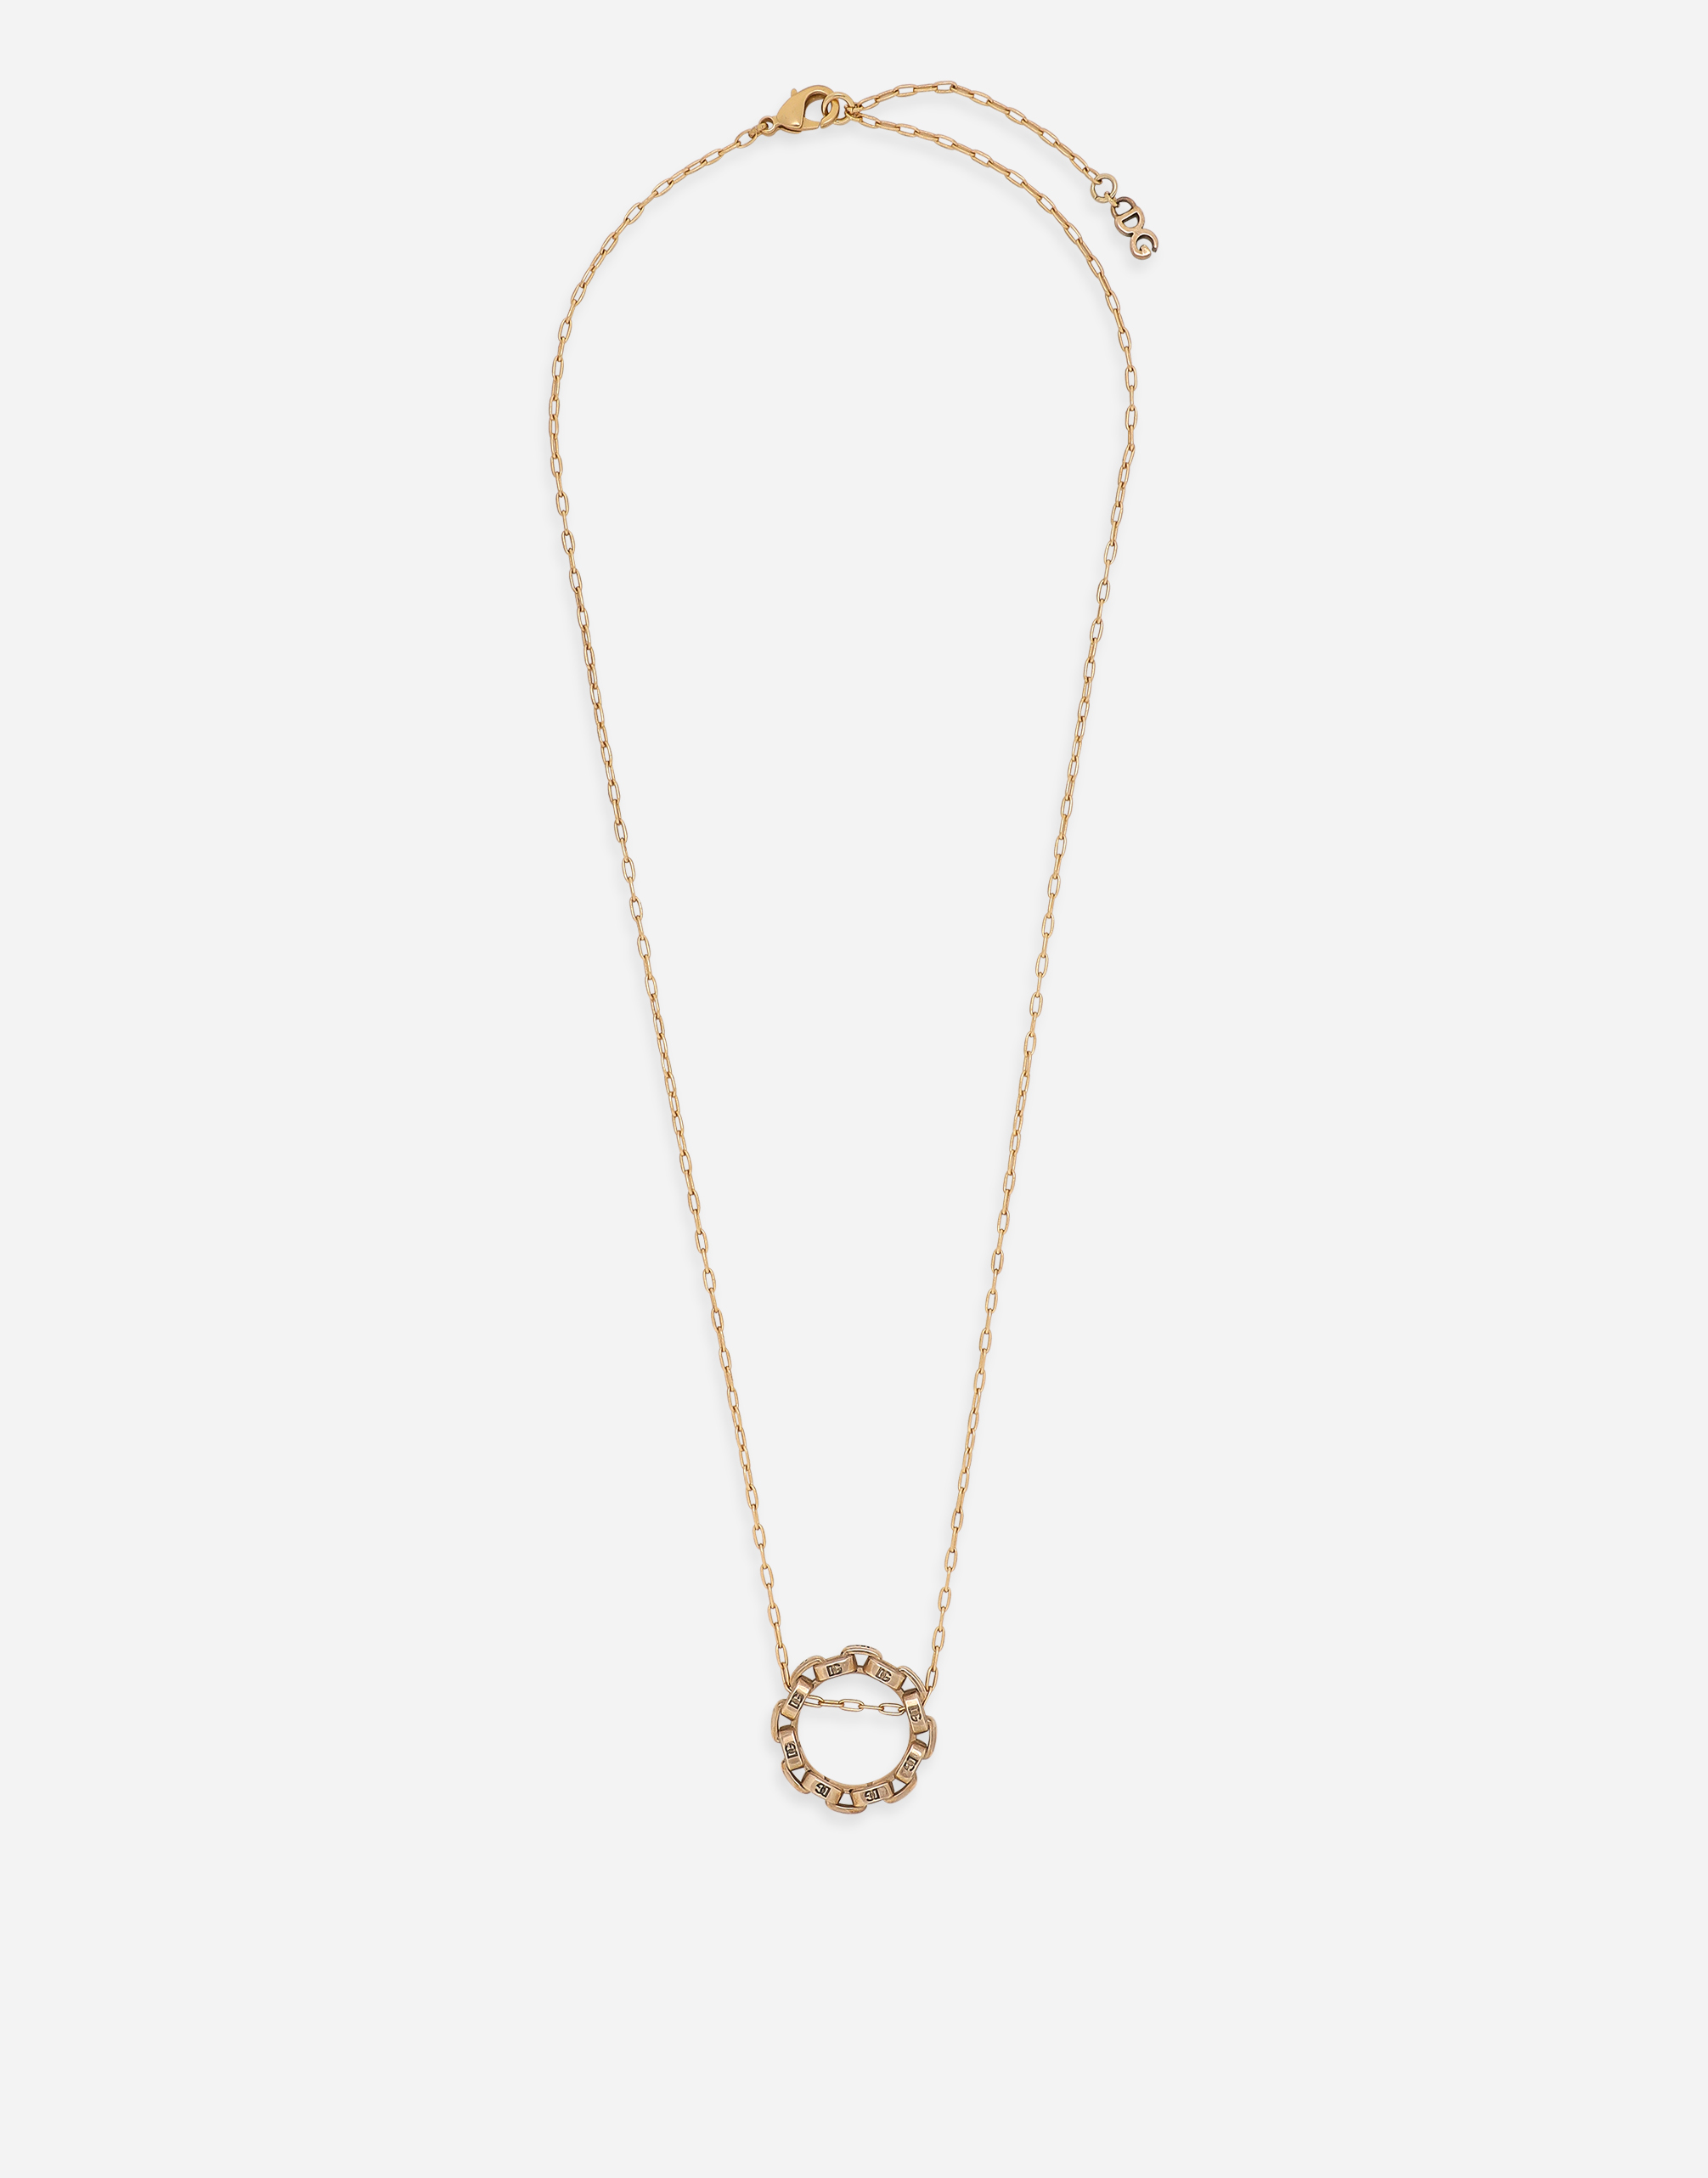 DG-logo necklace in Gold